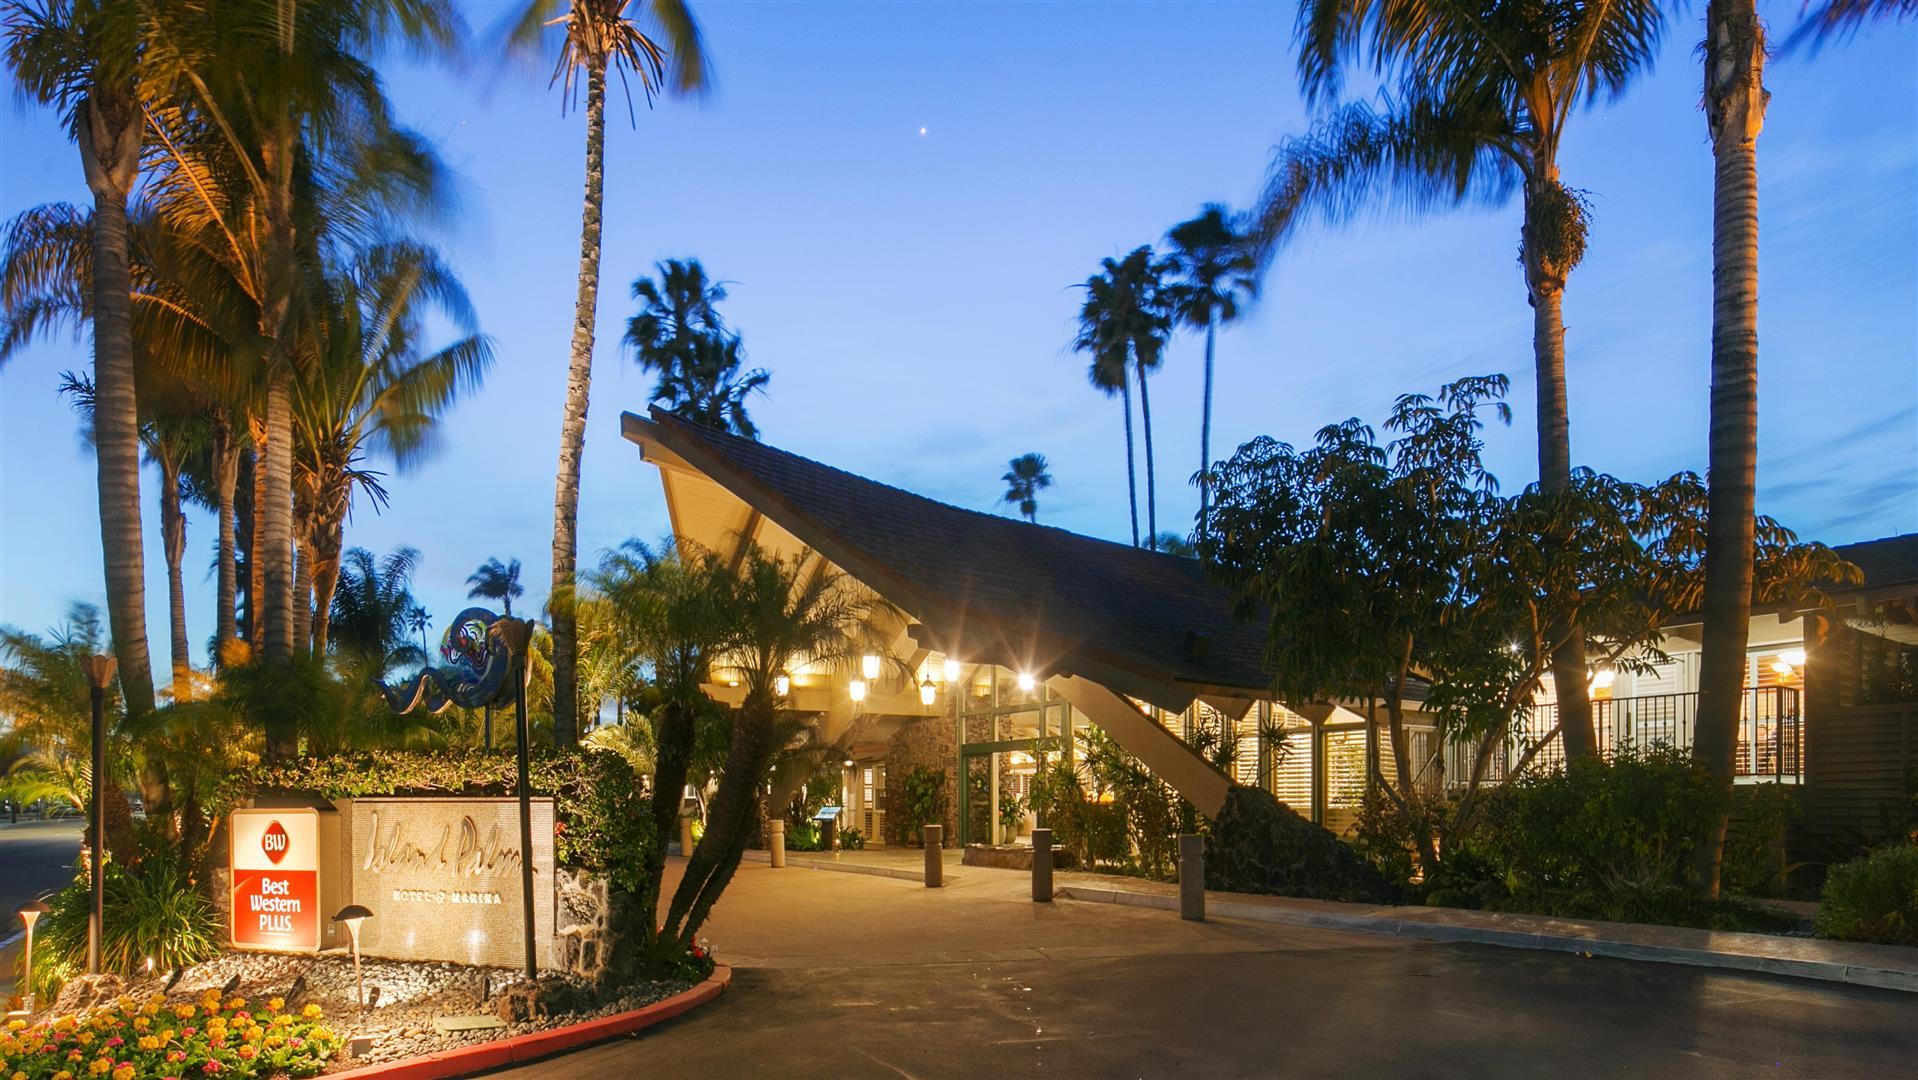 Best Western Plus Island Palms Hotel & Marina in San Diego, CA